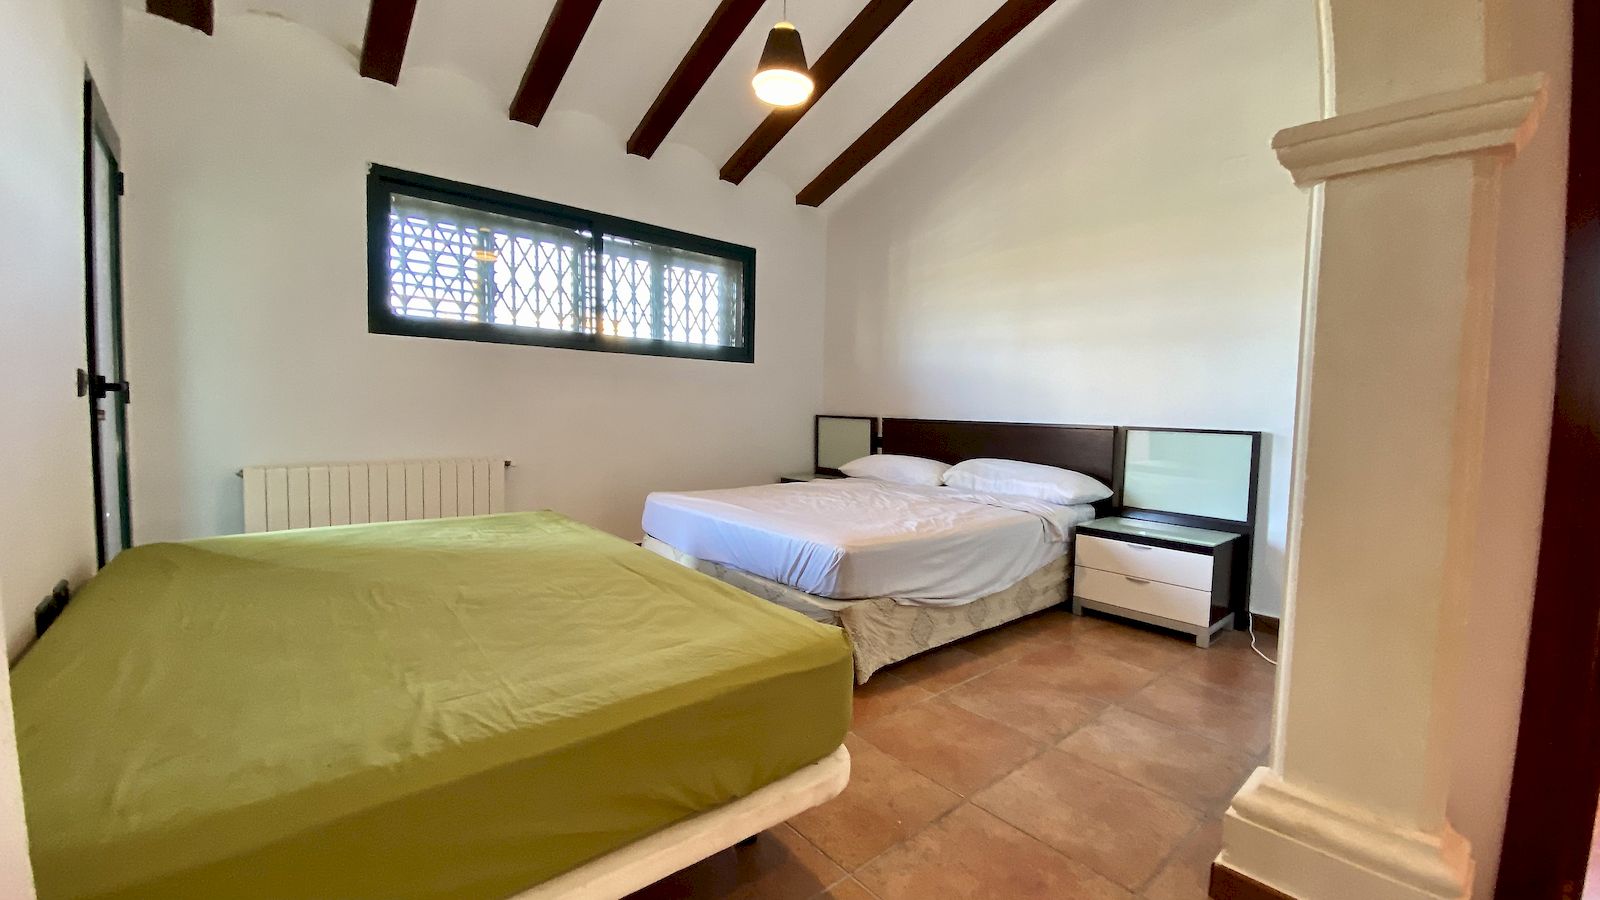 Villa for Sale in Puerta Fenicia with Sea View - Javea